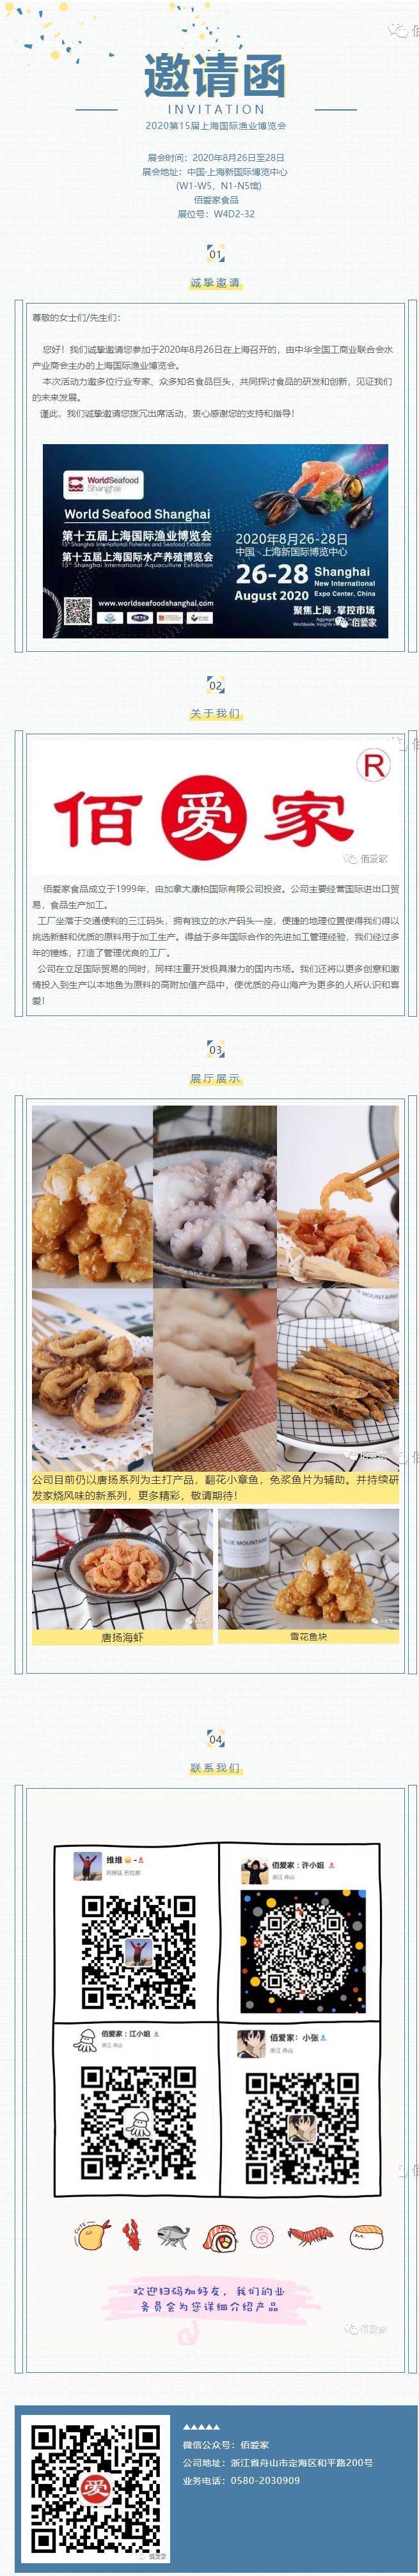 C-_Users_admin_Desktop_佰爱家诚邀您参加第15届上海国际渔业博览会.jpg